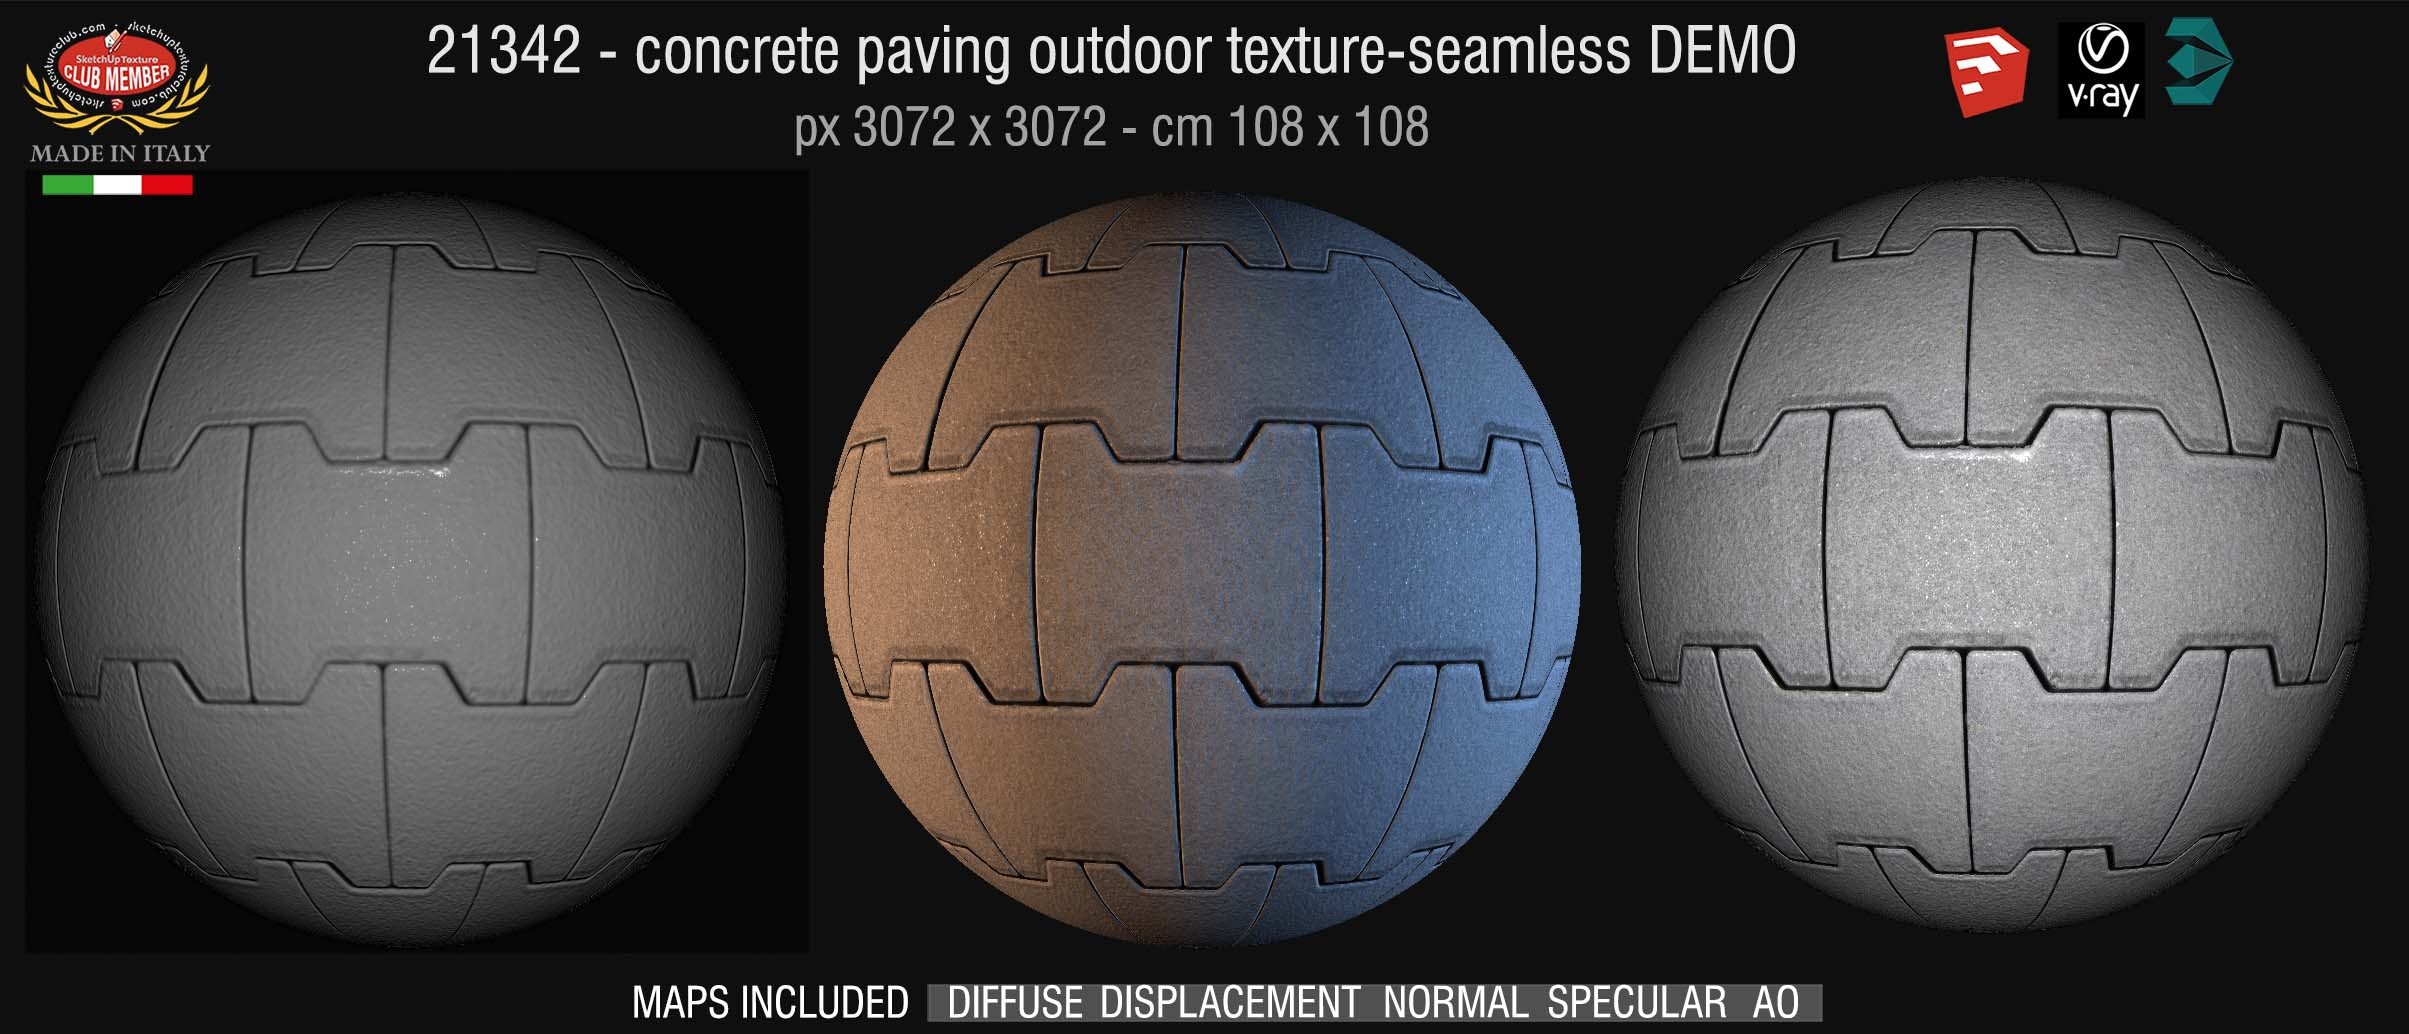 21342 HR concrete paving outdoor texture seamless + maps DEMO